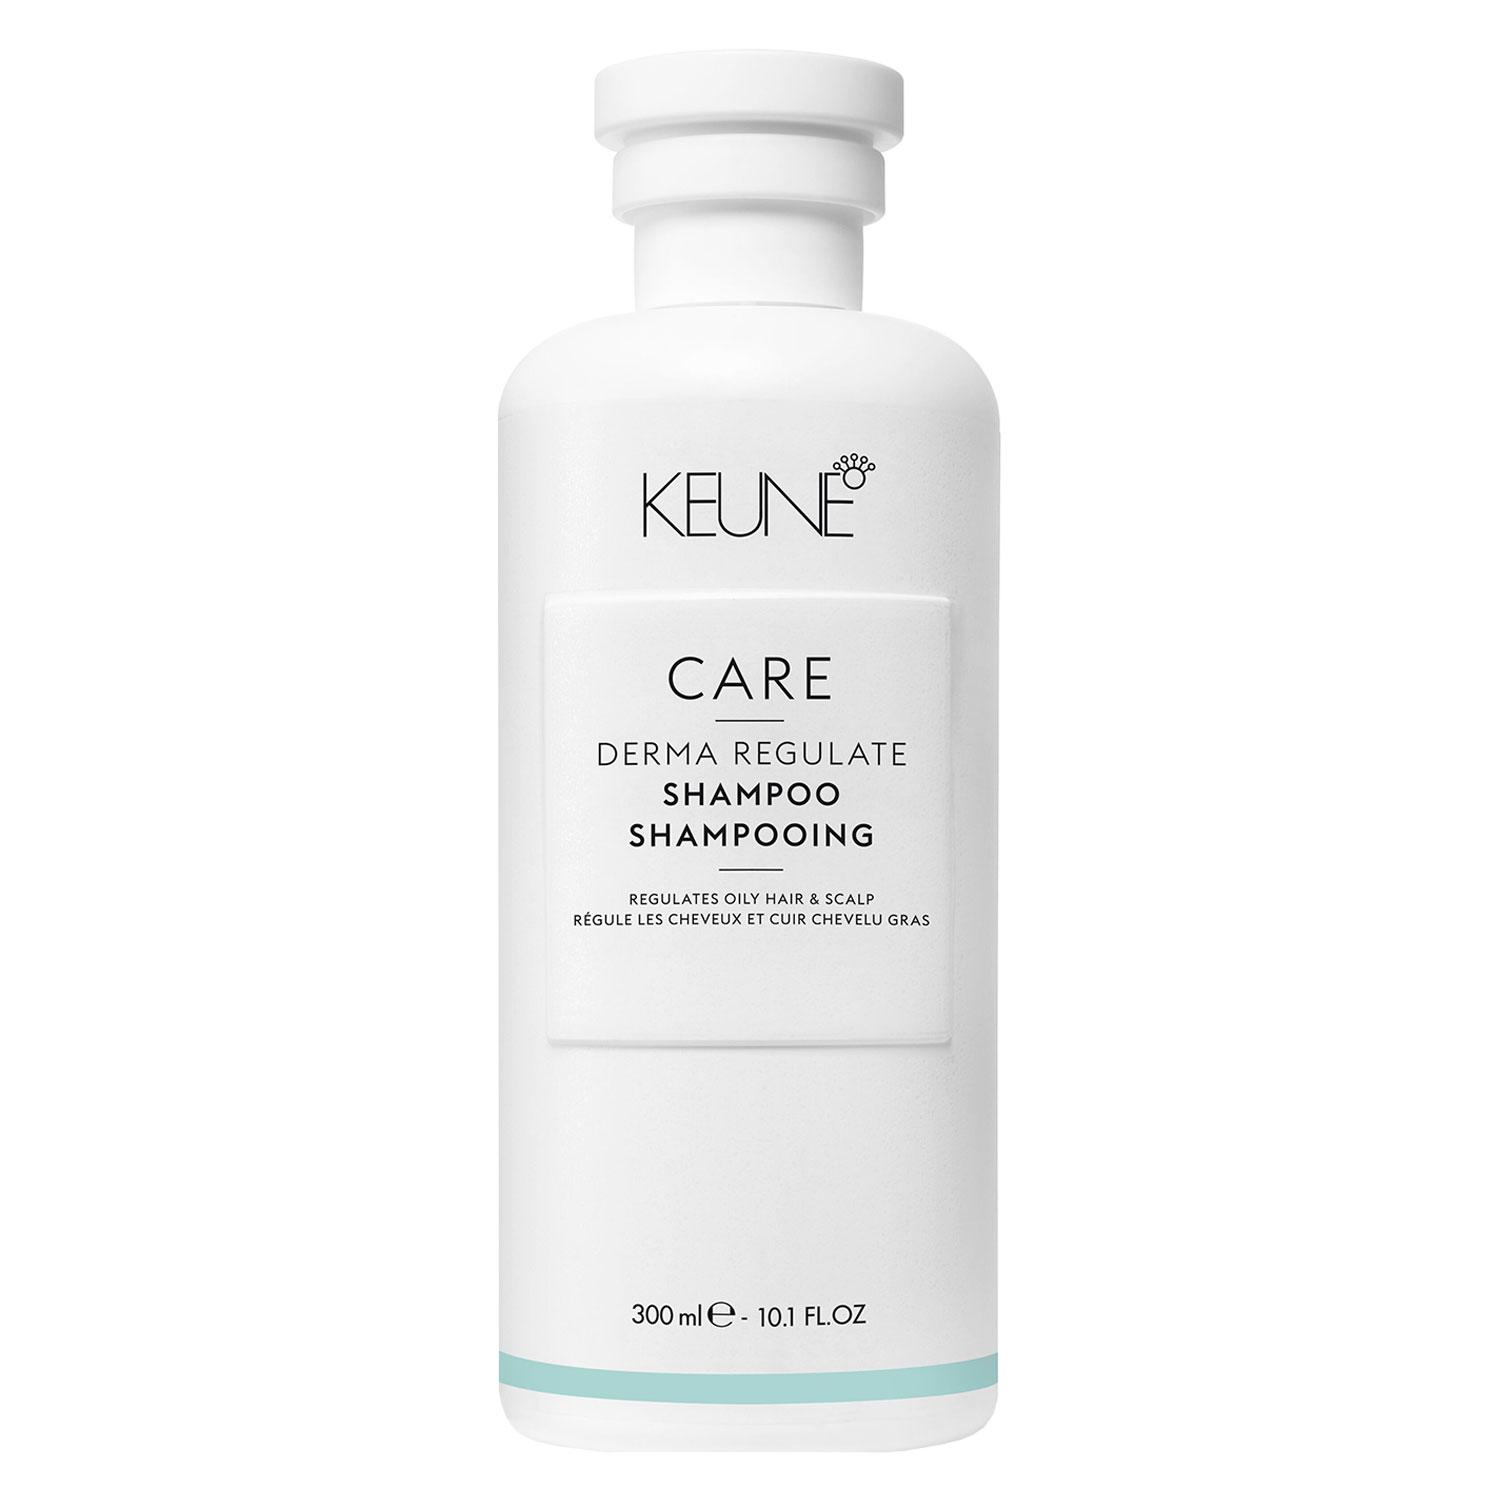 Keune Care - Derma Regulate Shampoo